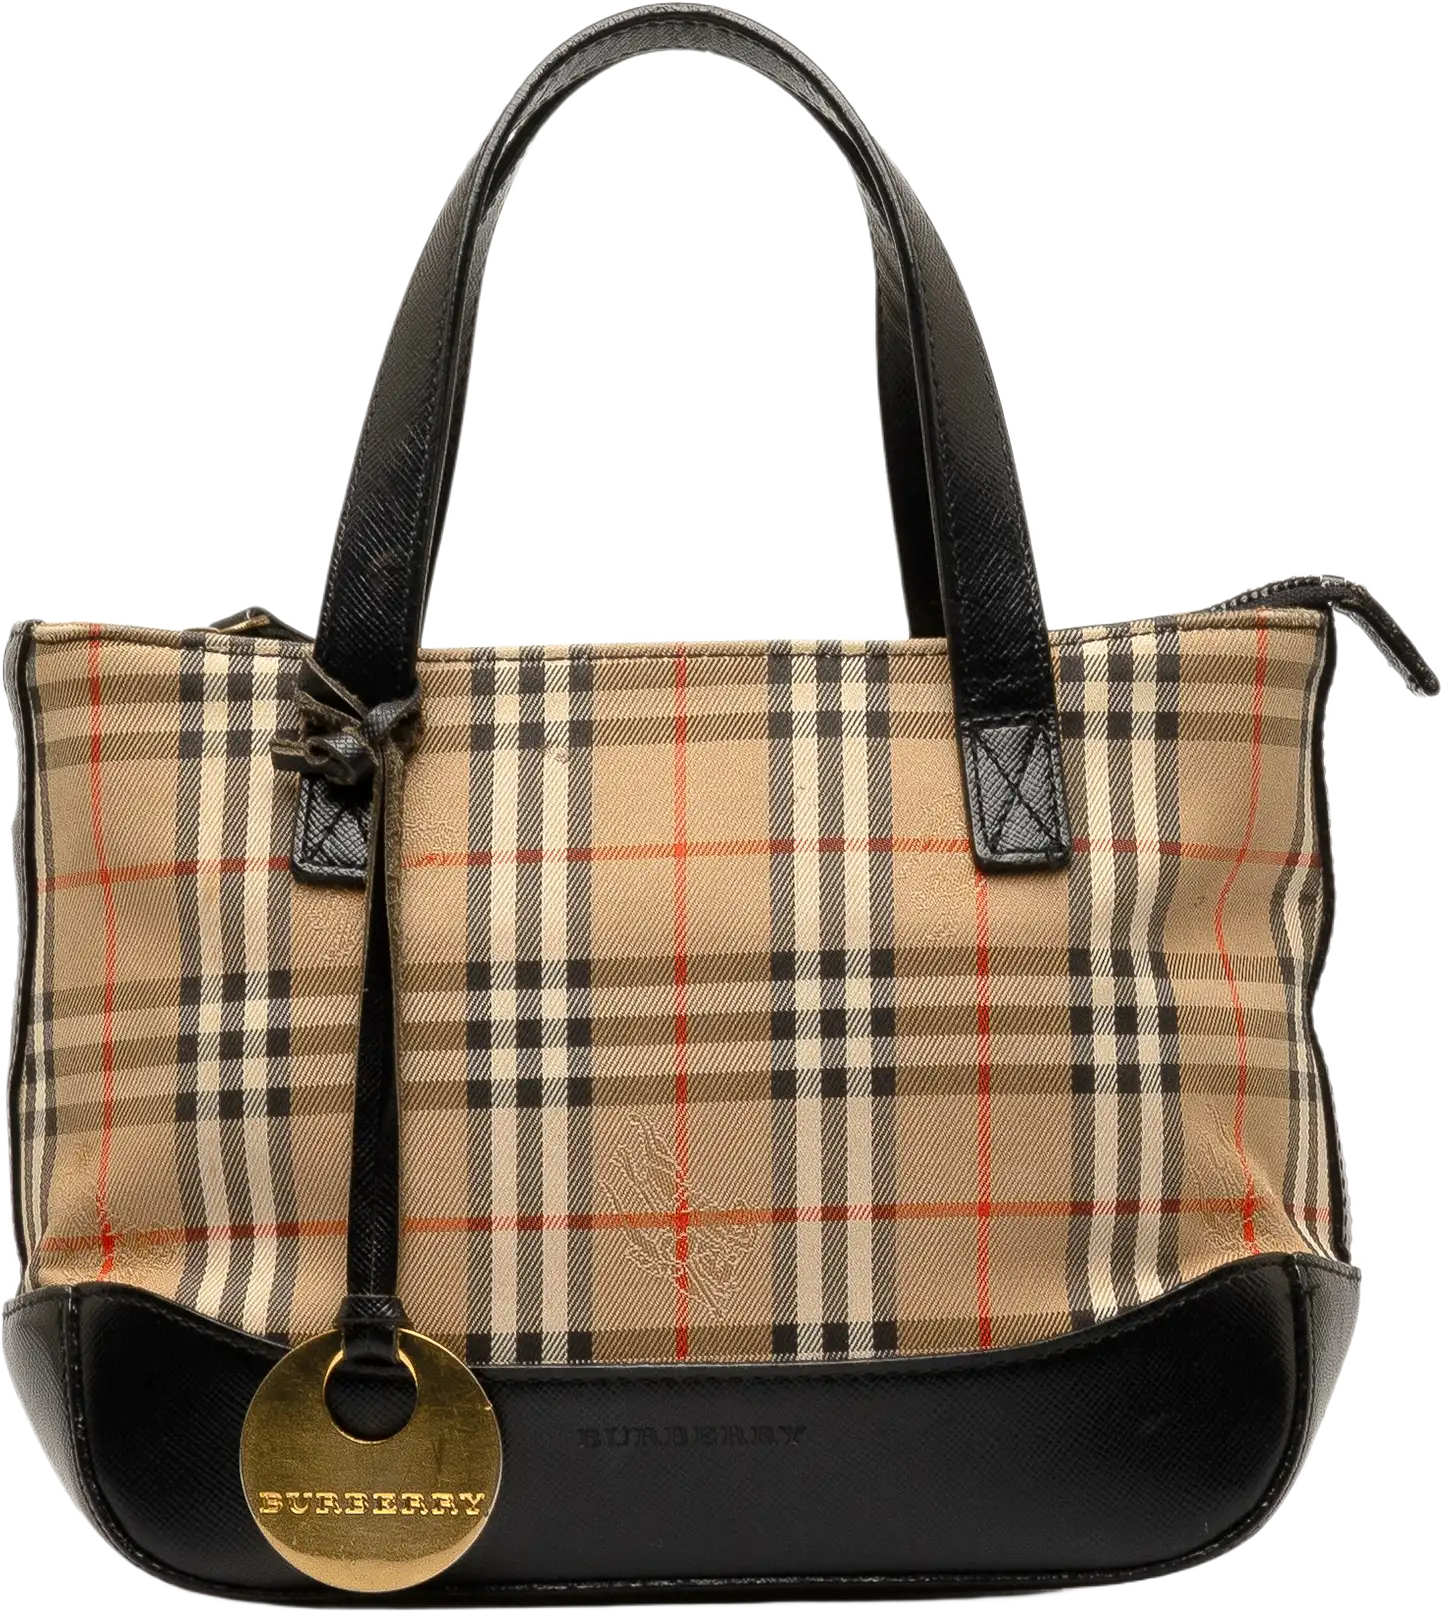 Burberry Haymarket Check Handbag